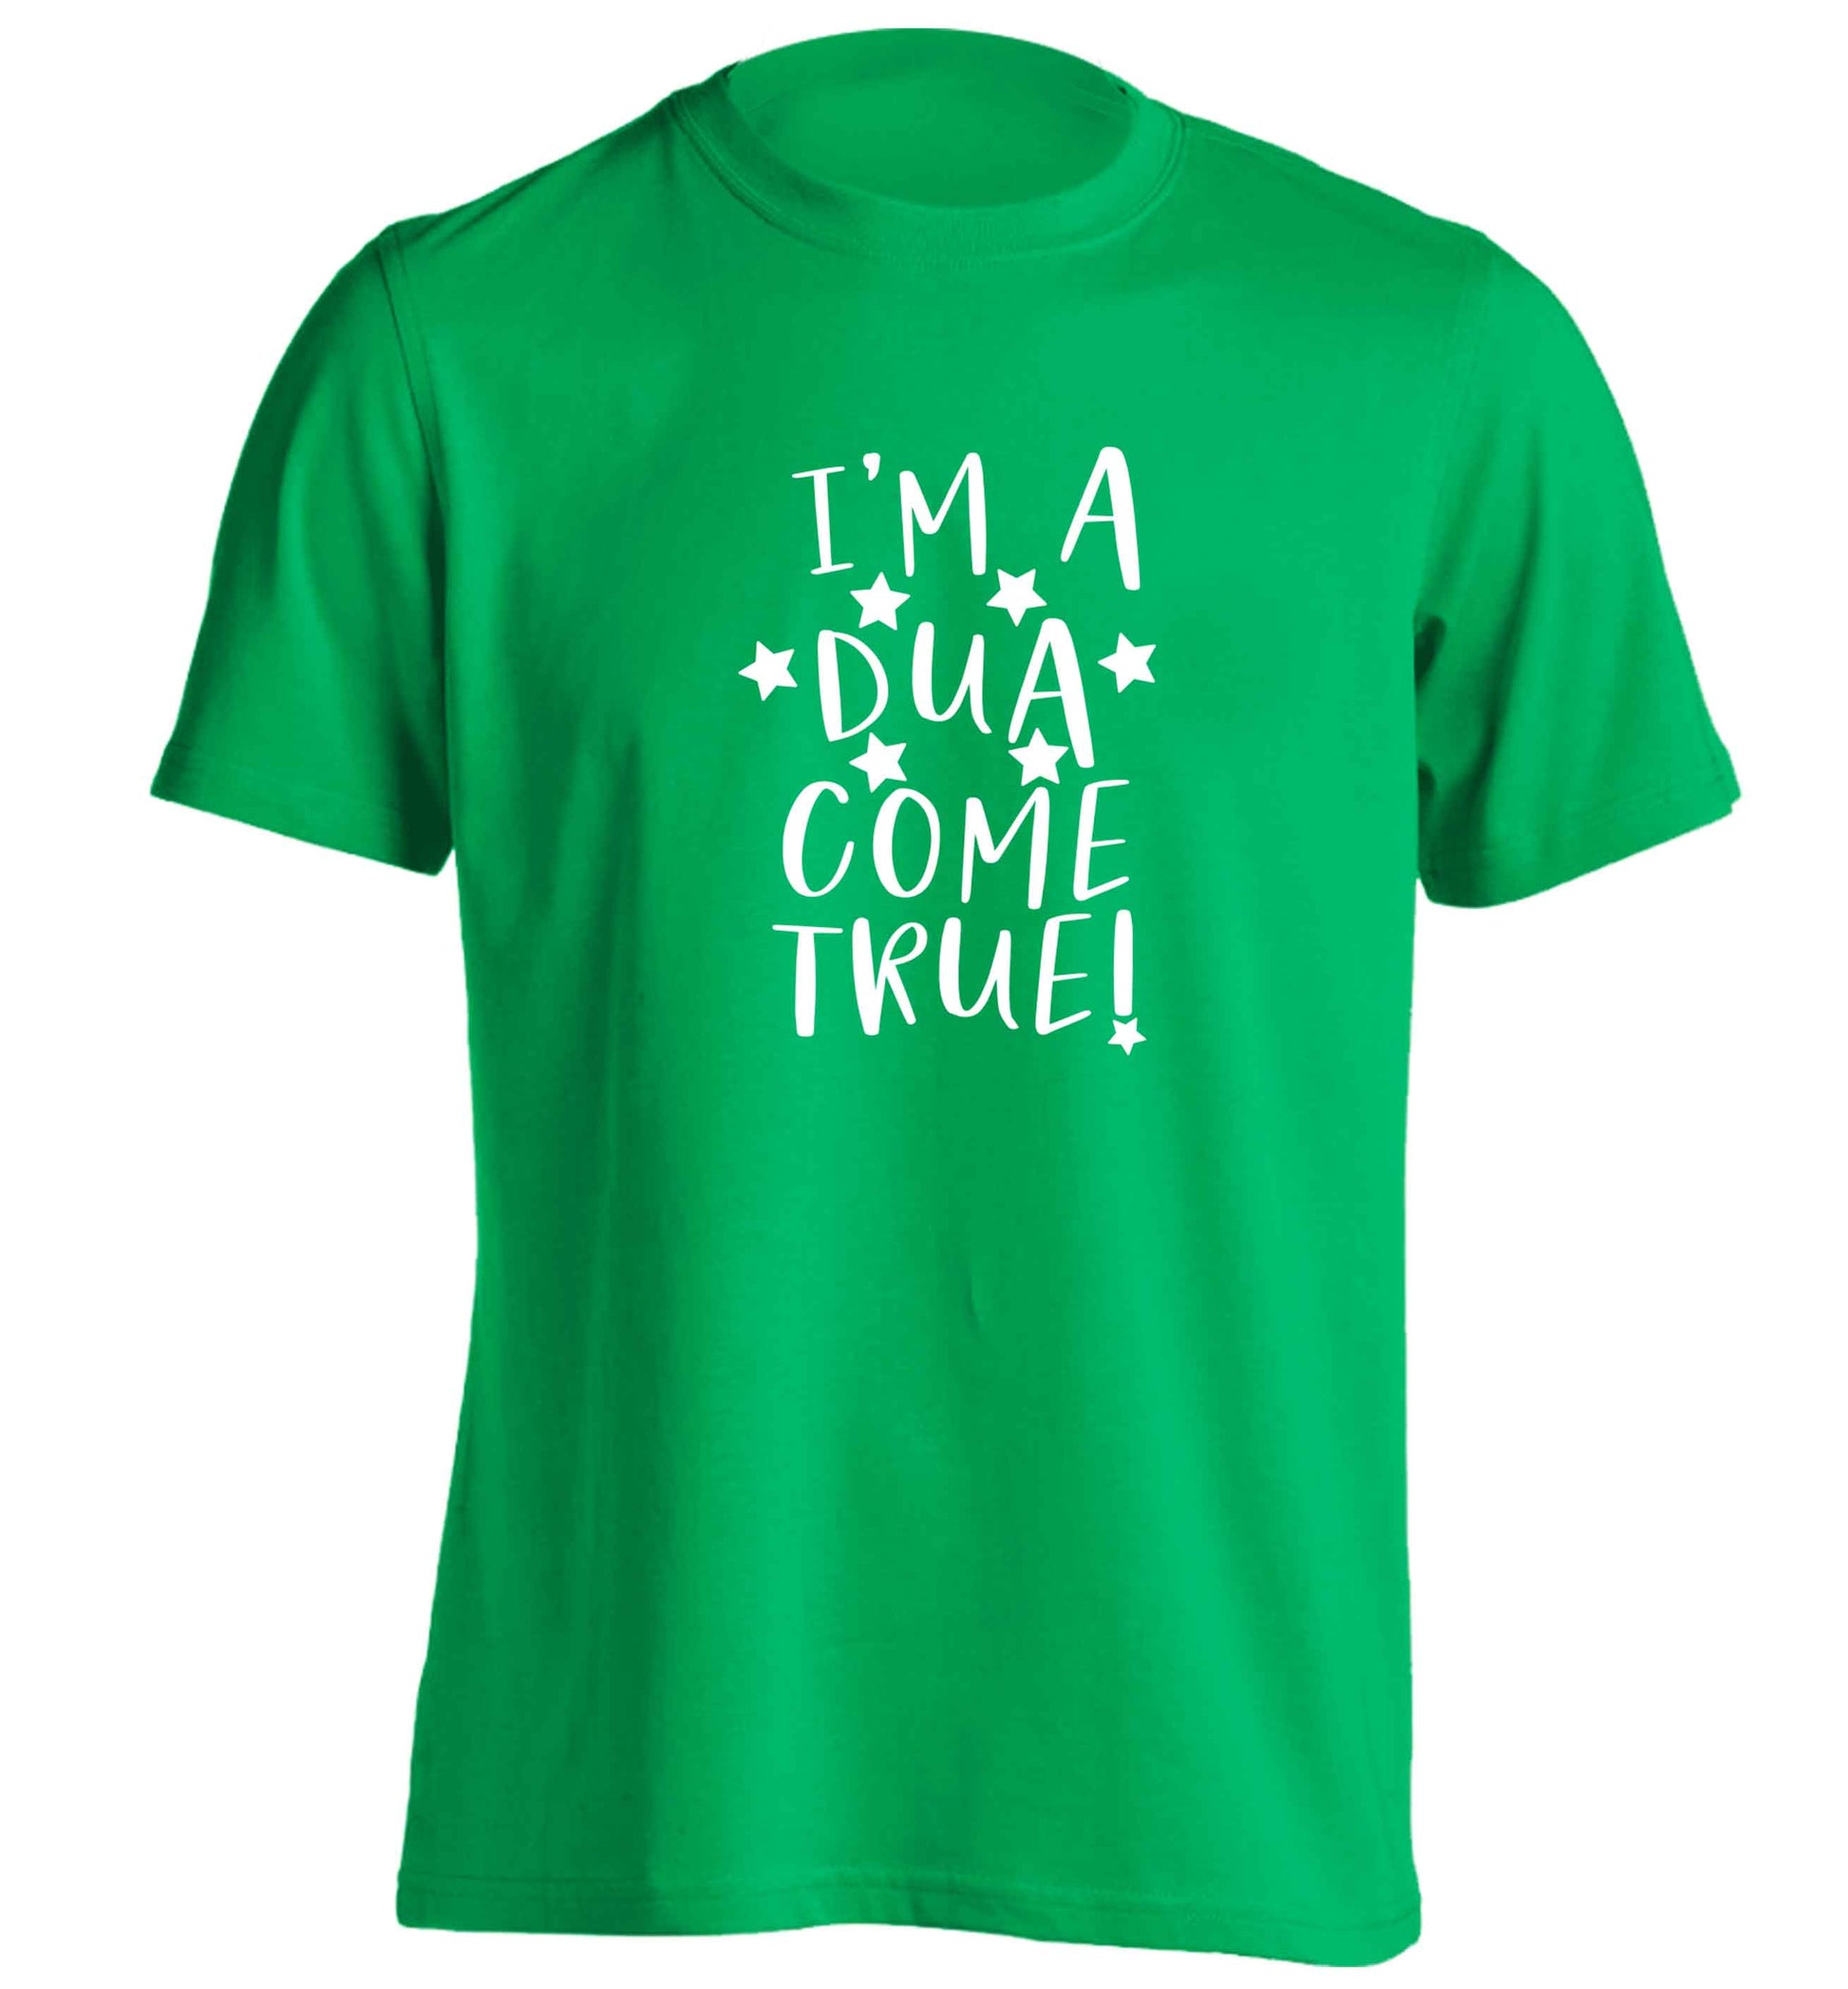 I'm a dua come true adults unisex green Tshirt 2XL